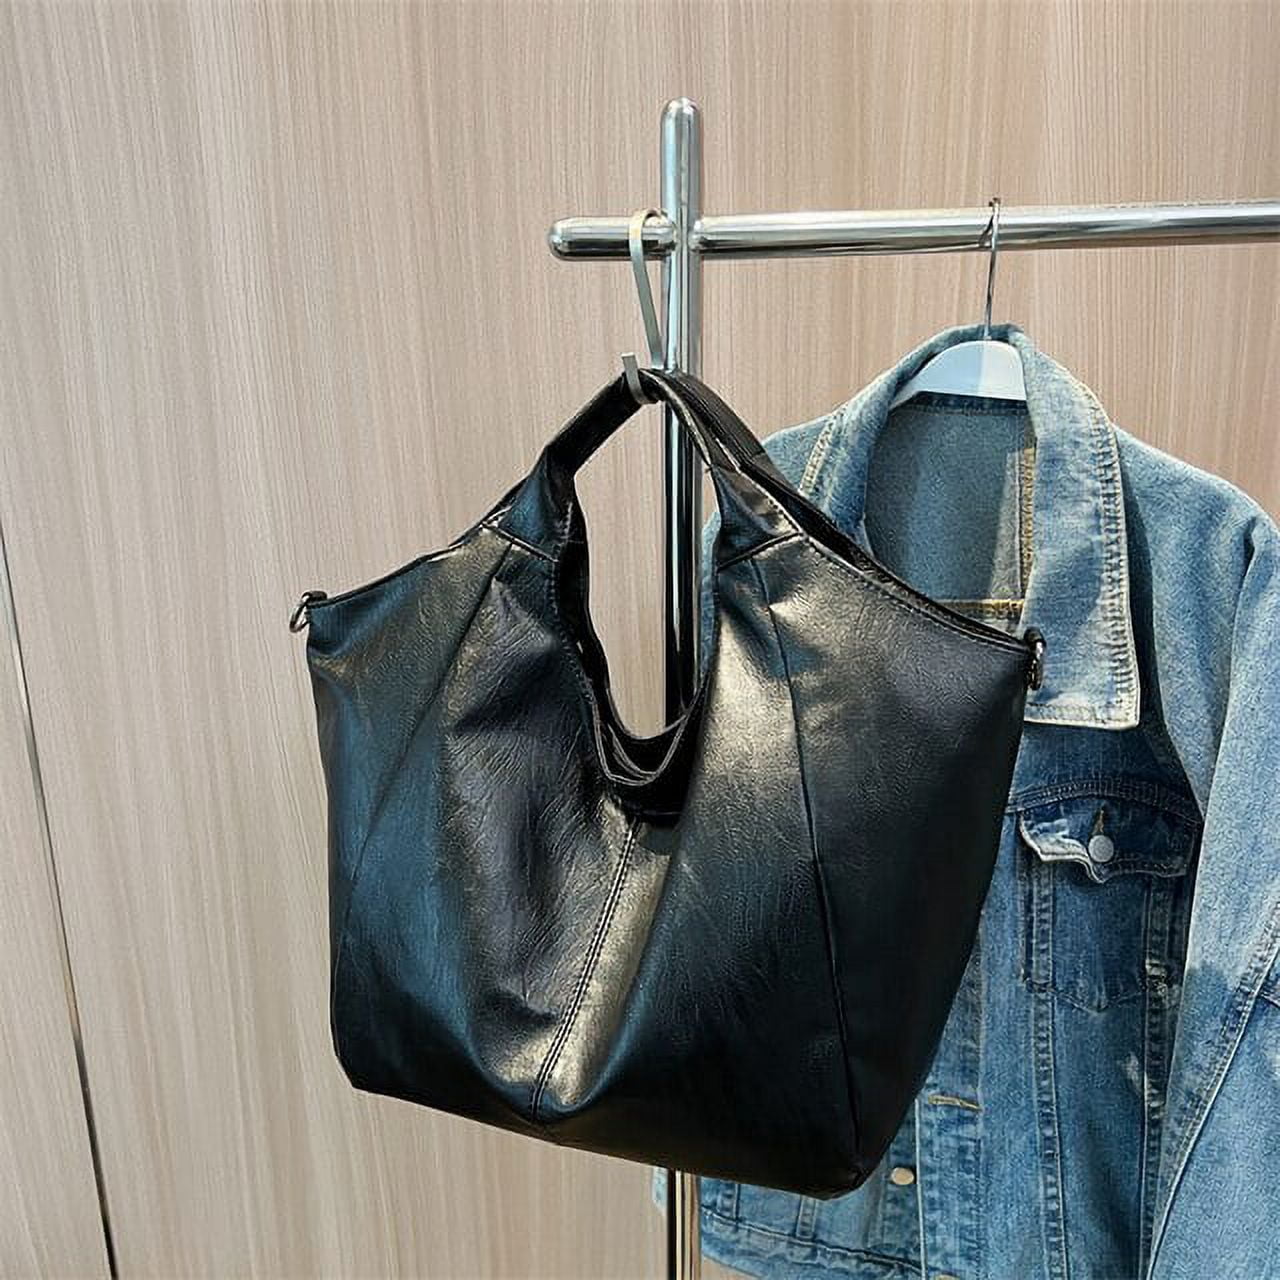 CoCopeaunts New Handbags With Purse Women Luxury Brand Handbag